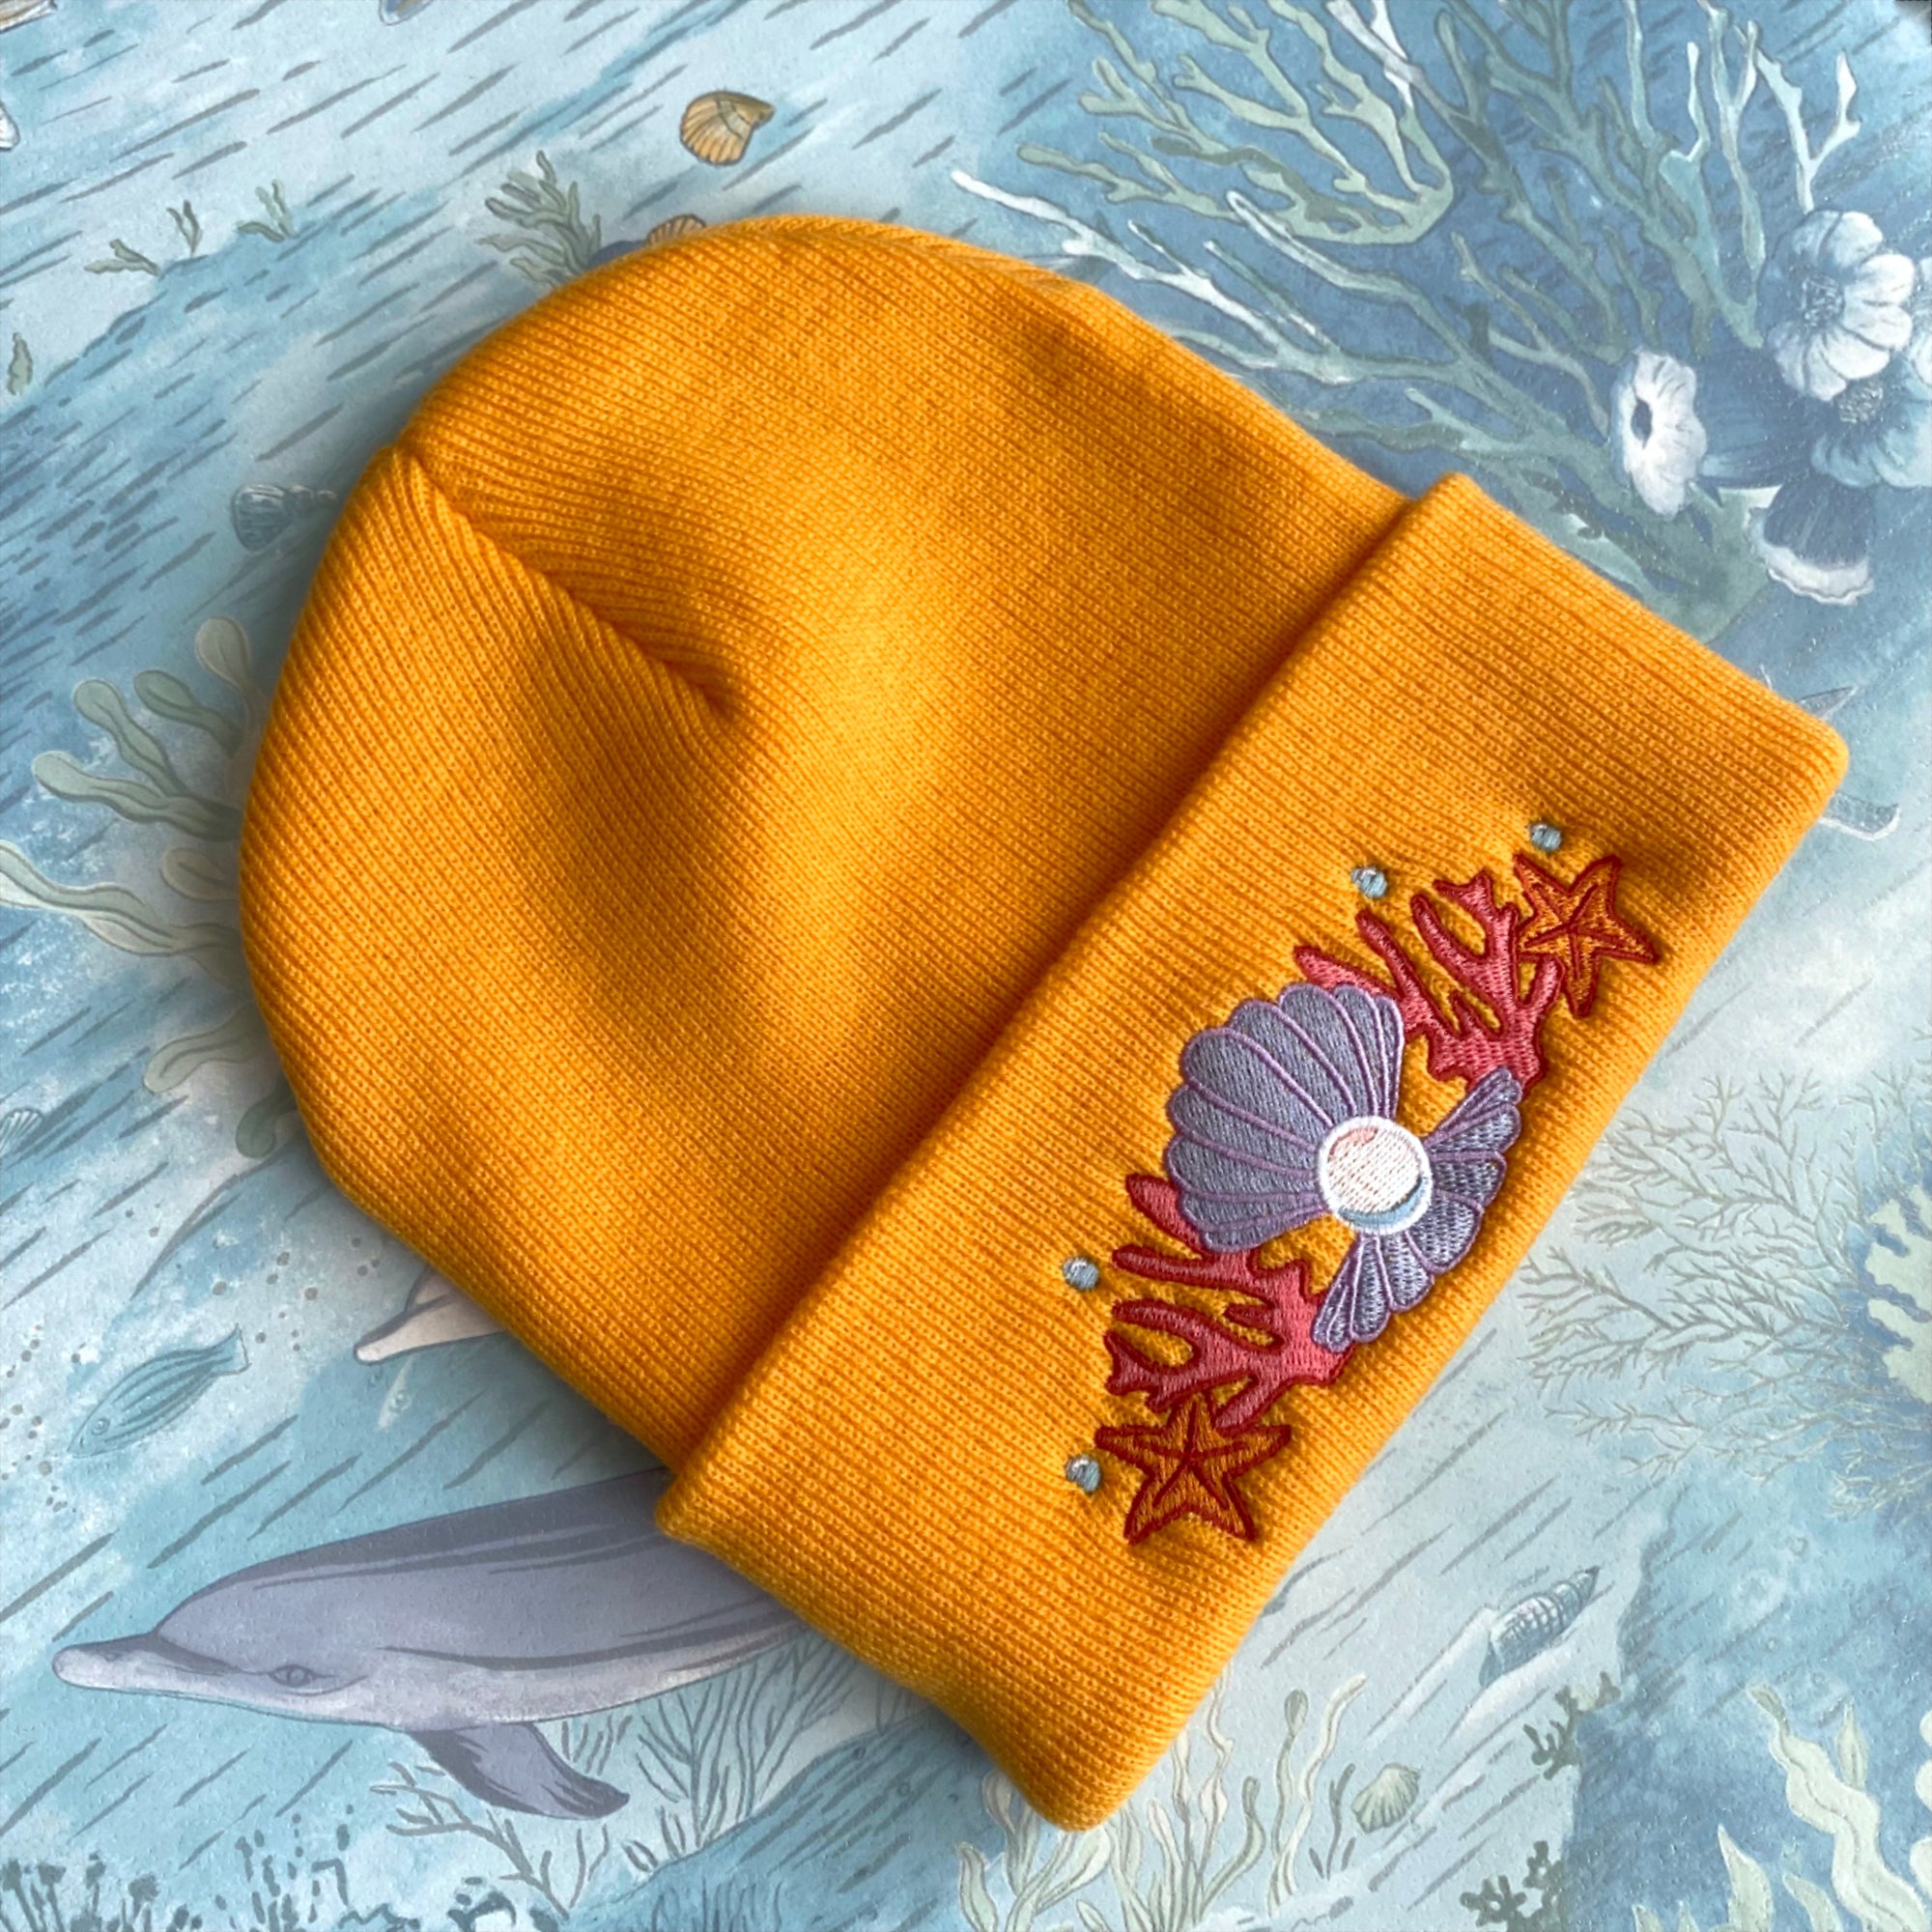 Shell Crown Beanie Hat &#39;22 - Starfish Gold - Merpola